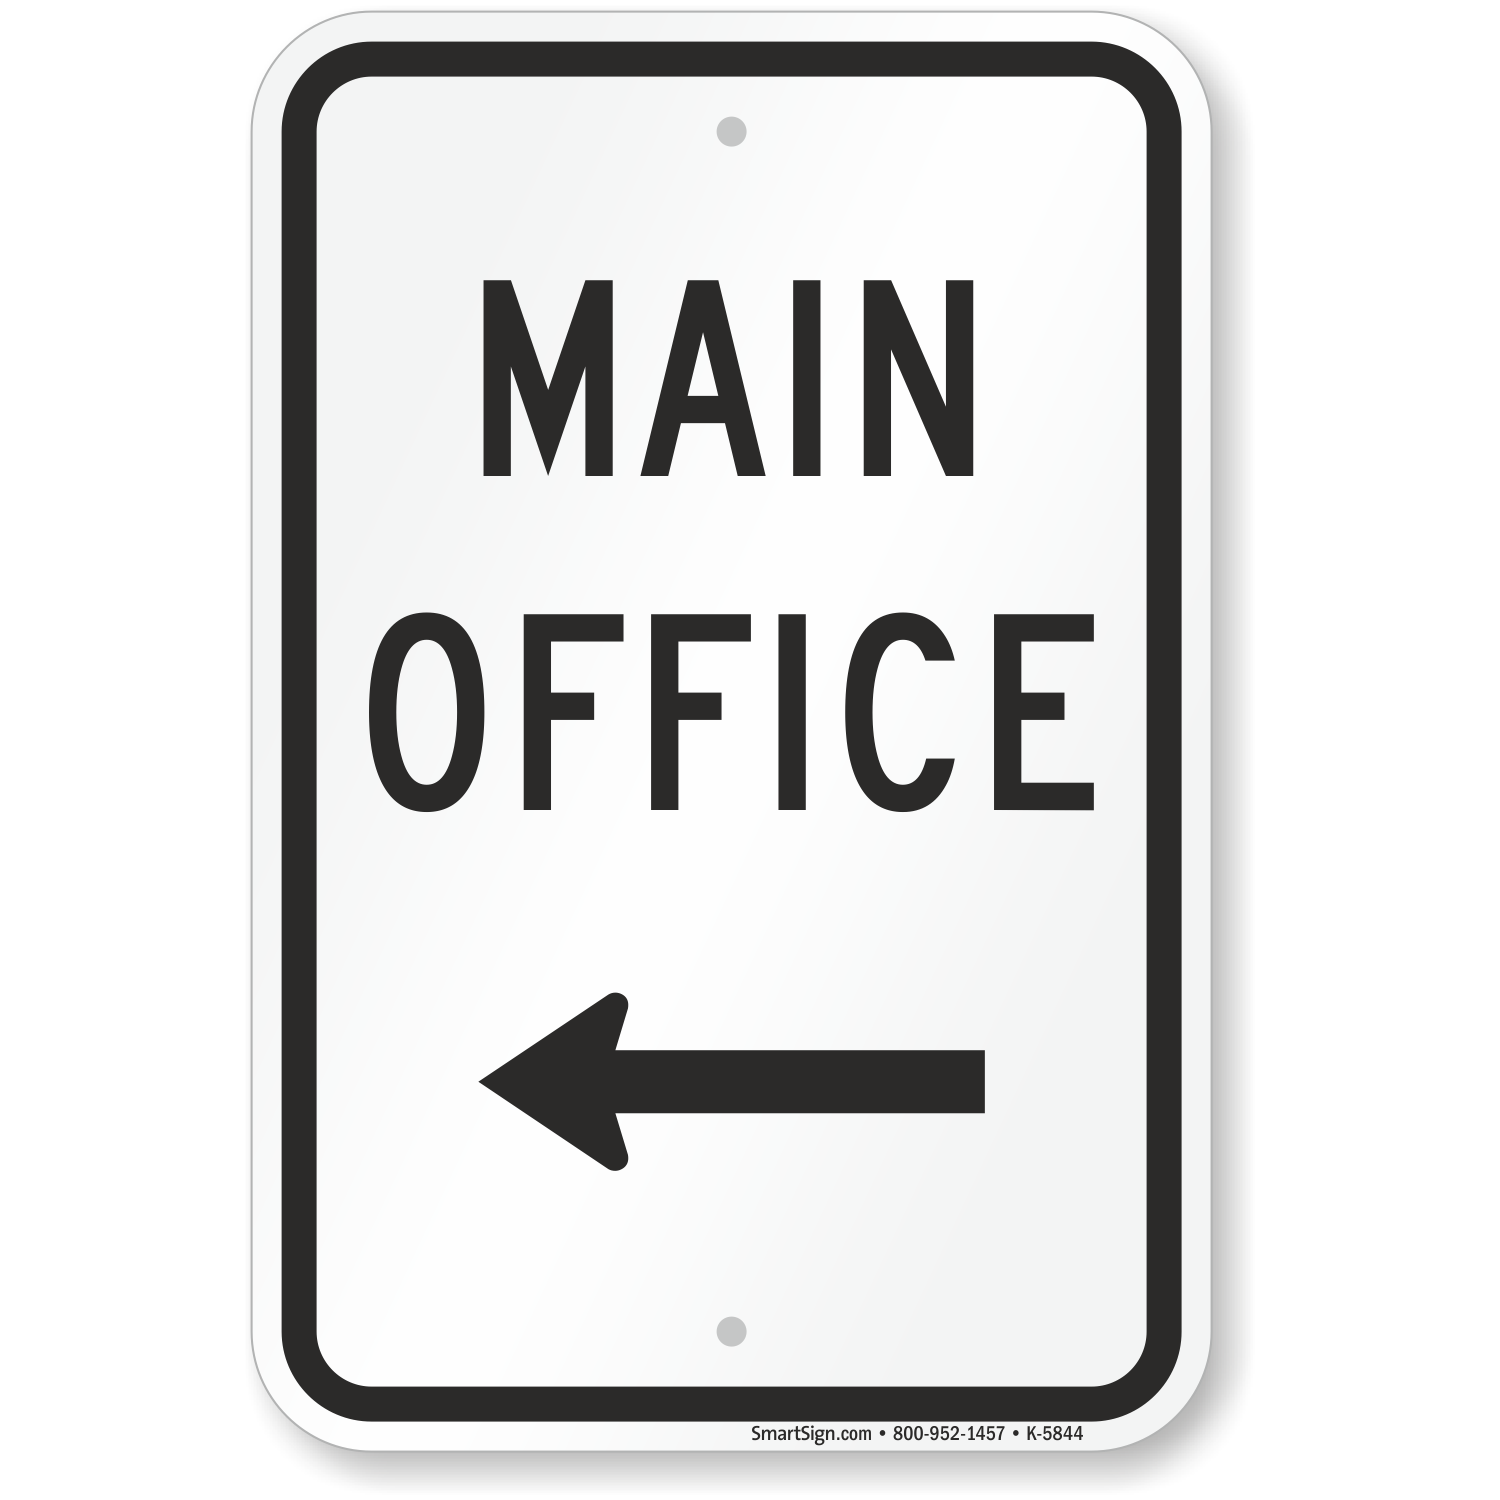 Main Office Sign with Arrow, SKU: K-5844